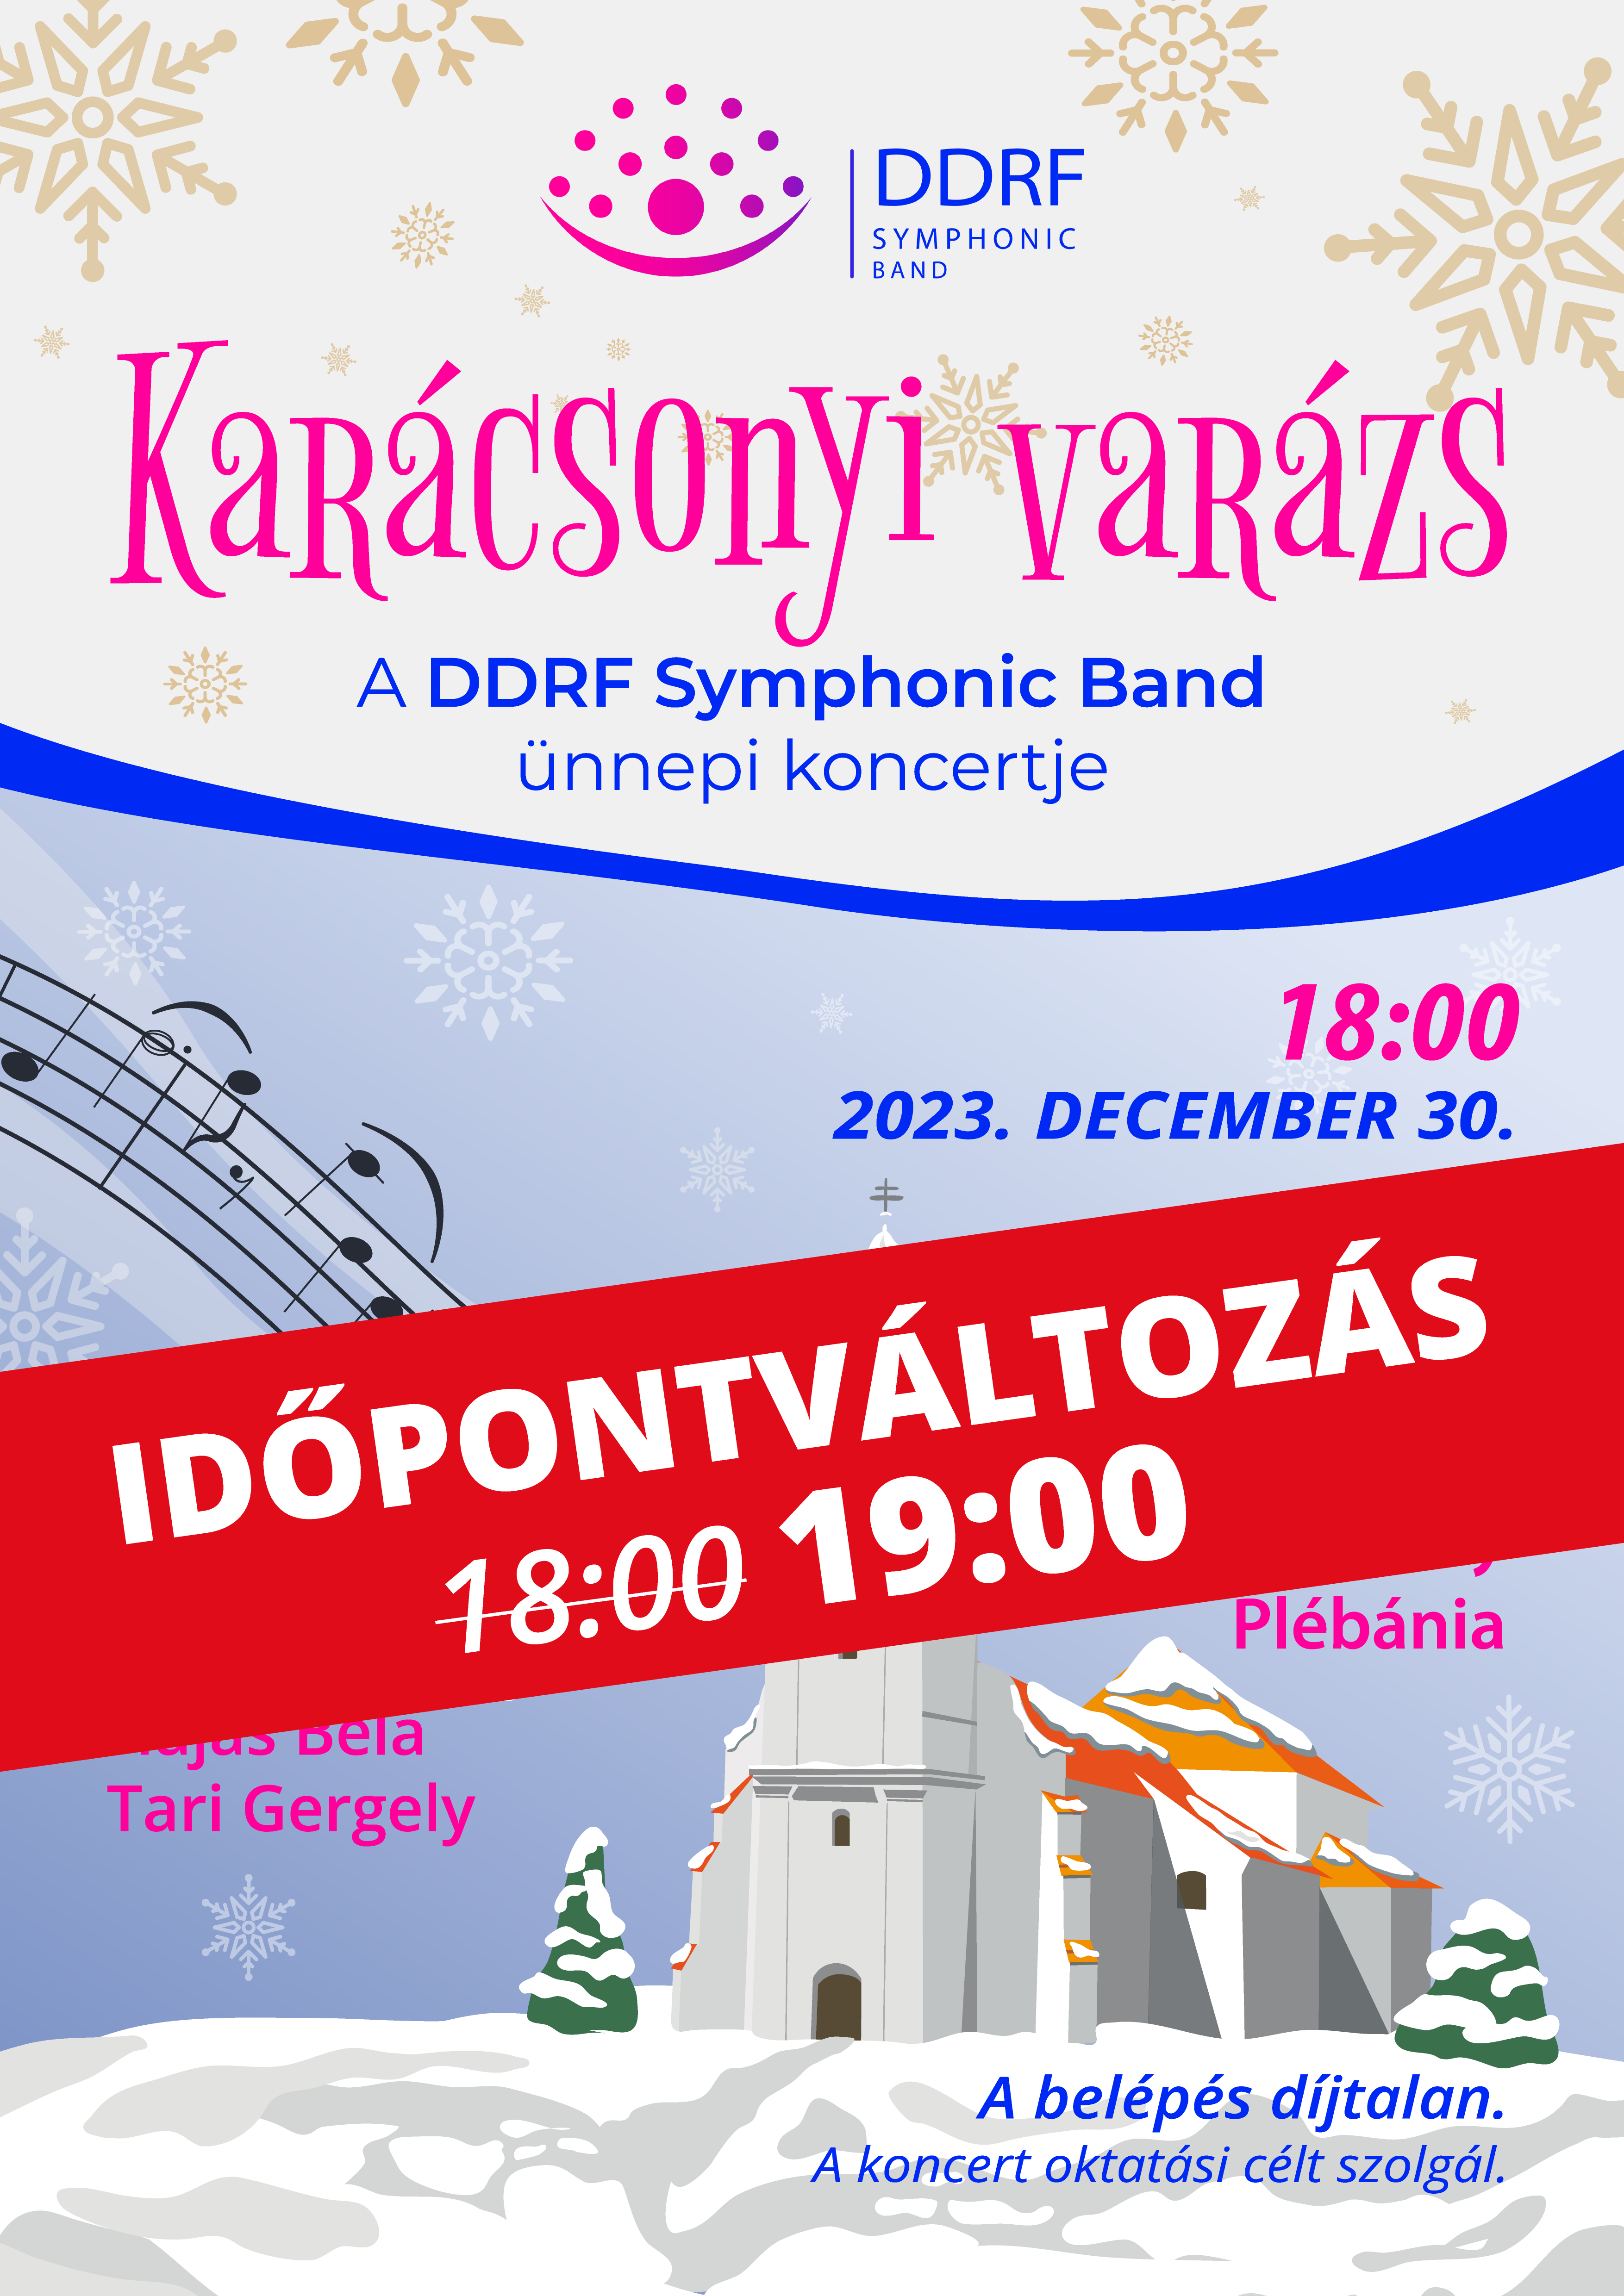 Karácsonyi varázs - DDRF Symphonic Band 2023.